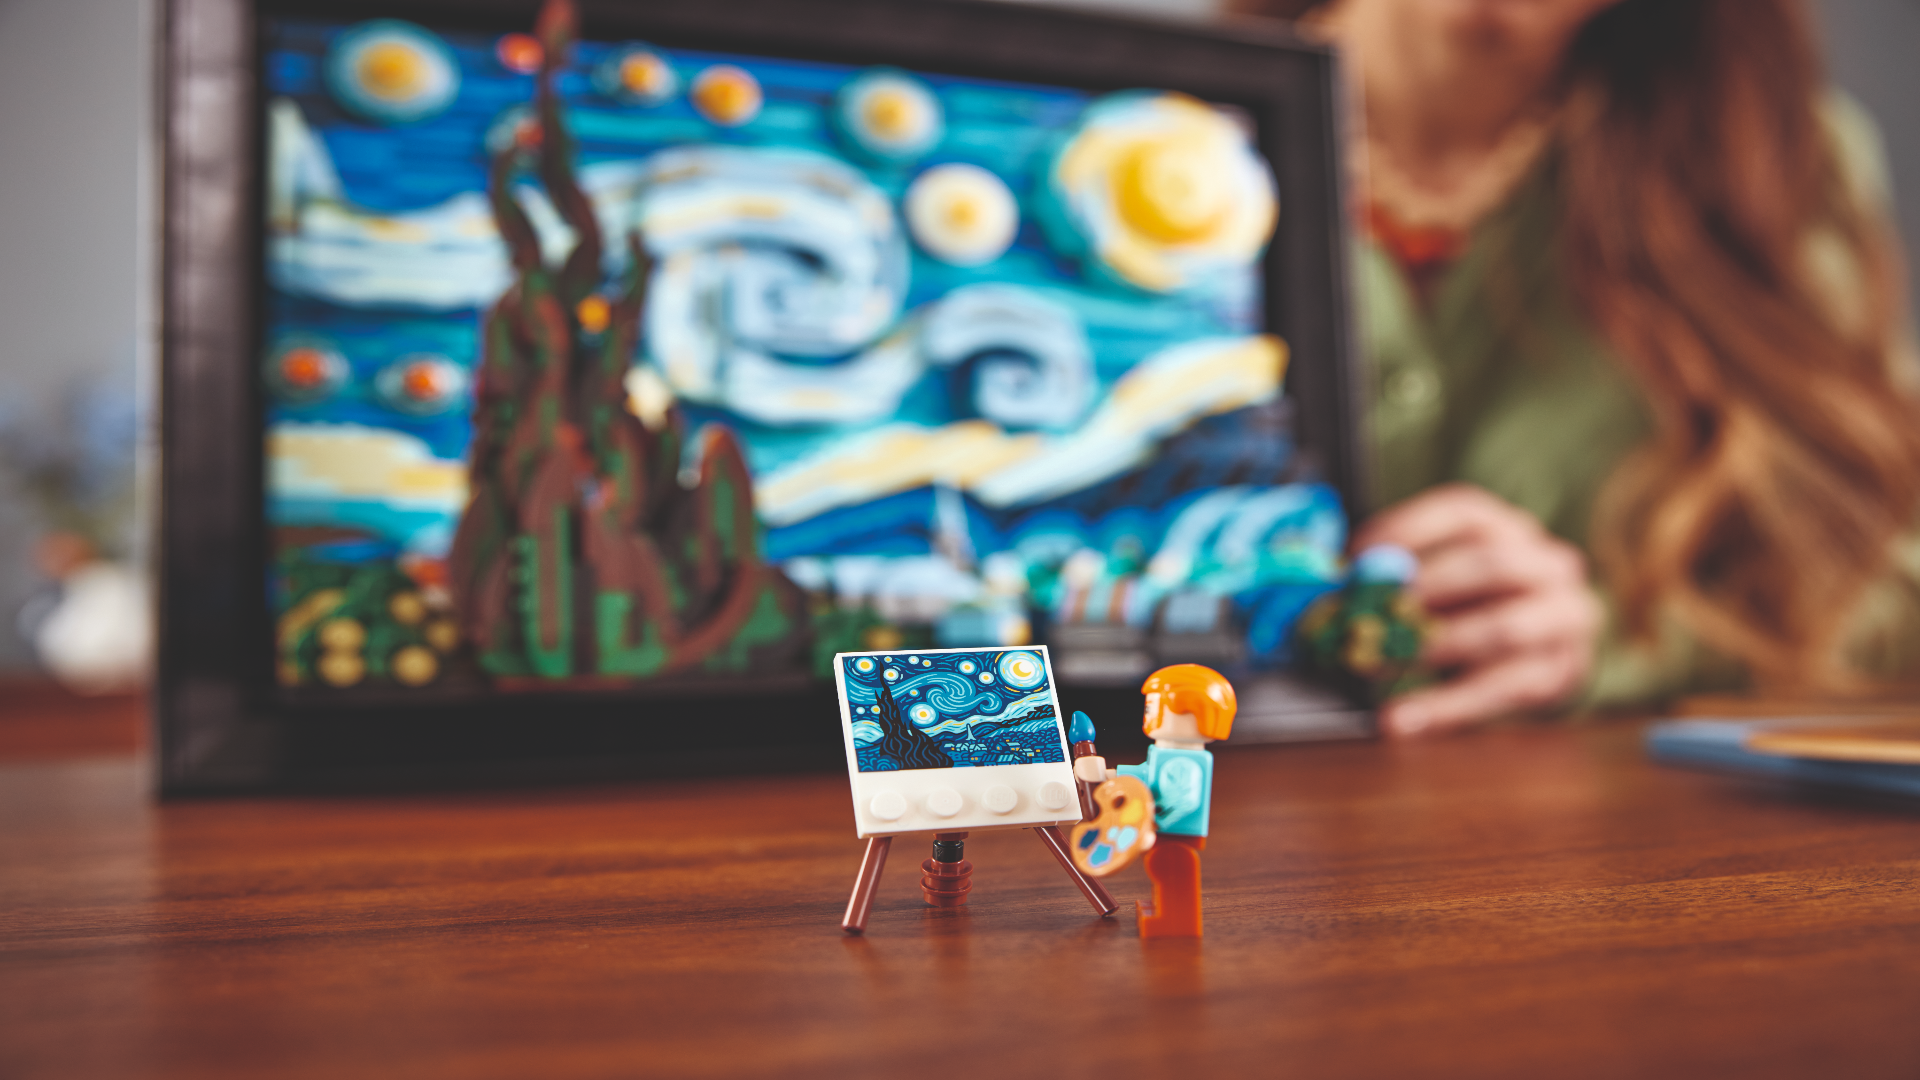 Meet the fan designer of LEGO Ideas Vincent van Gogh – The Starry Night